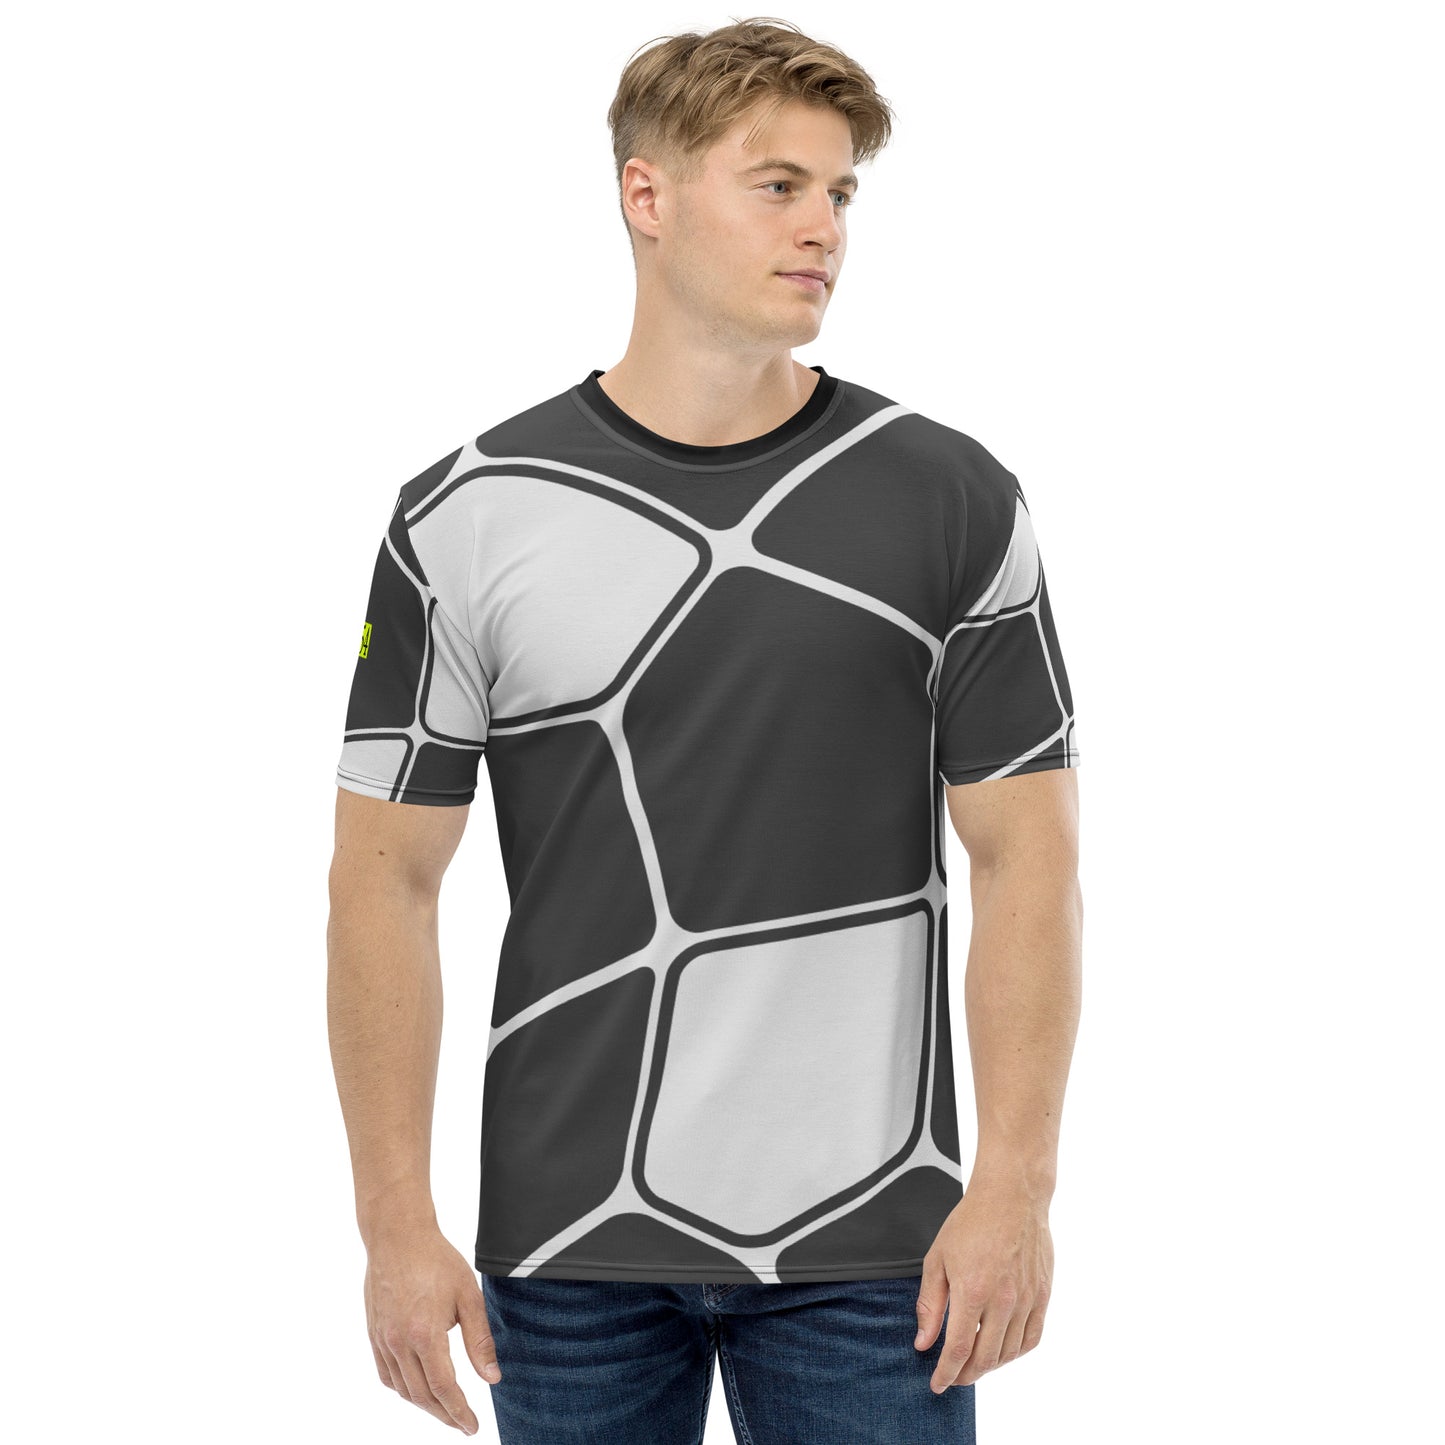 Turtle Shell 954 Men's t-shirt